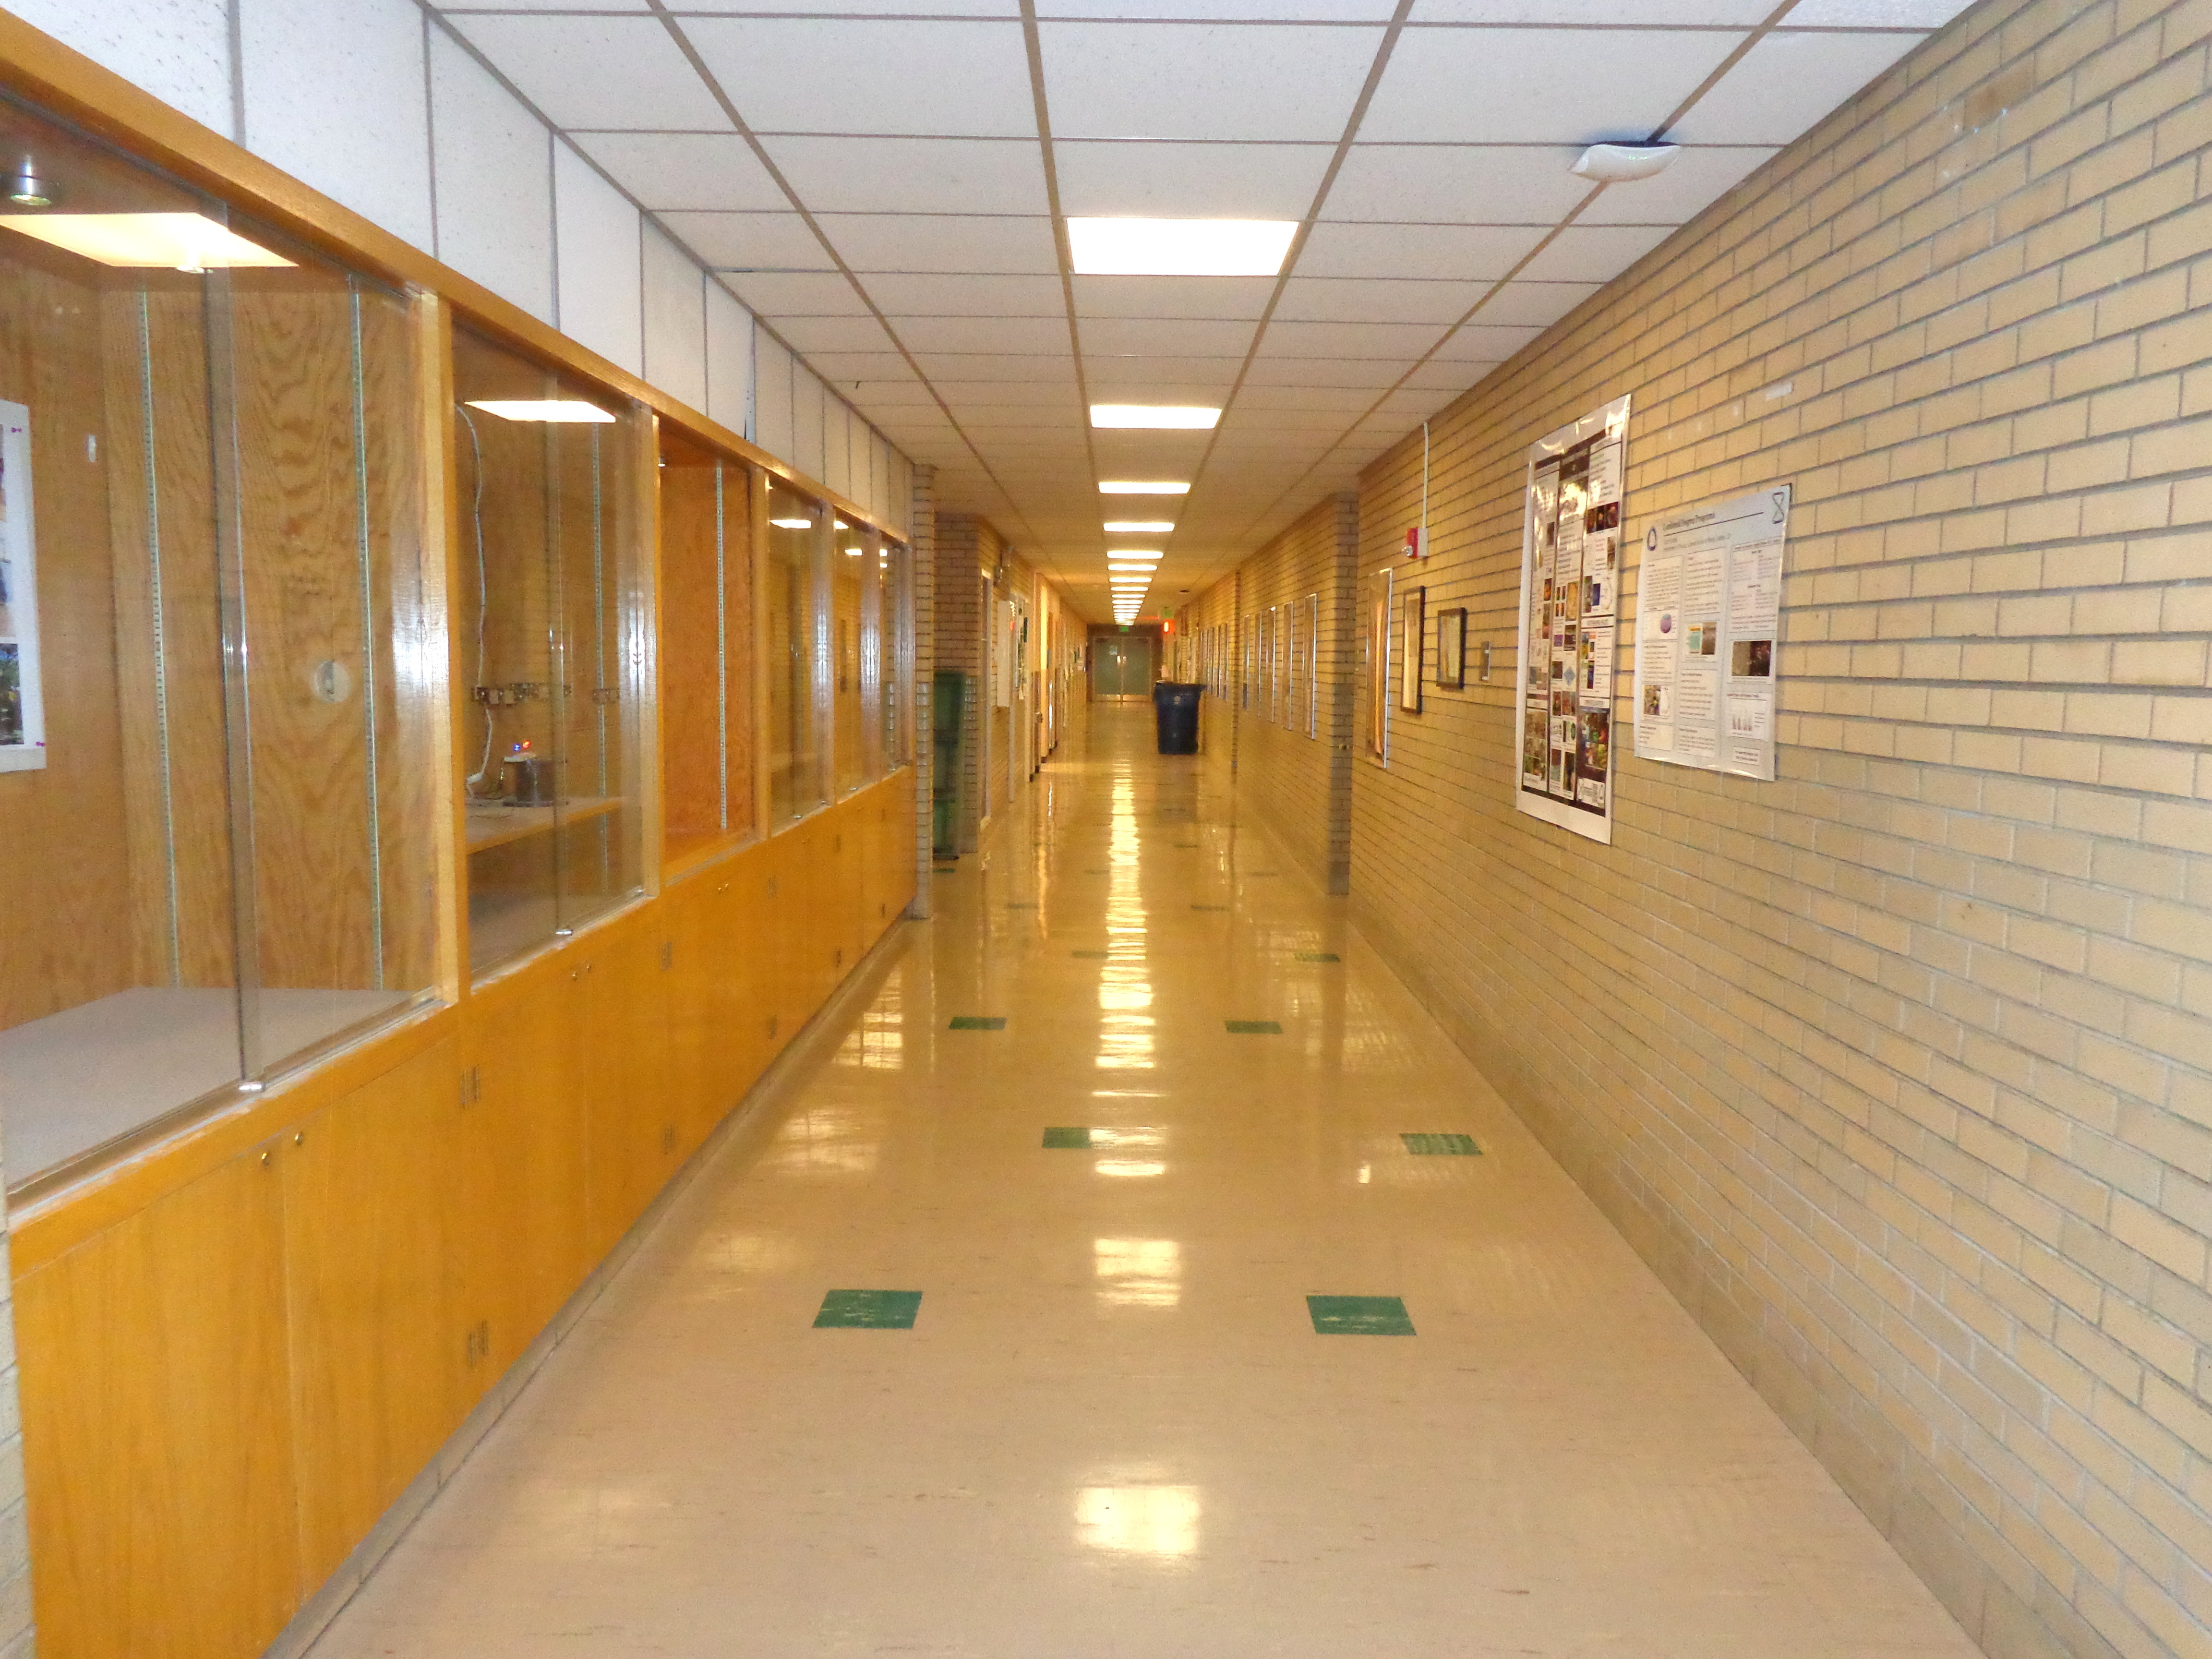 Empty School Hallway Picture. Free Photograph. Photo Public Domain